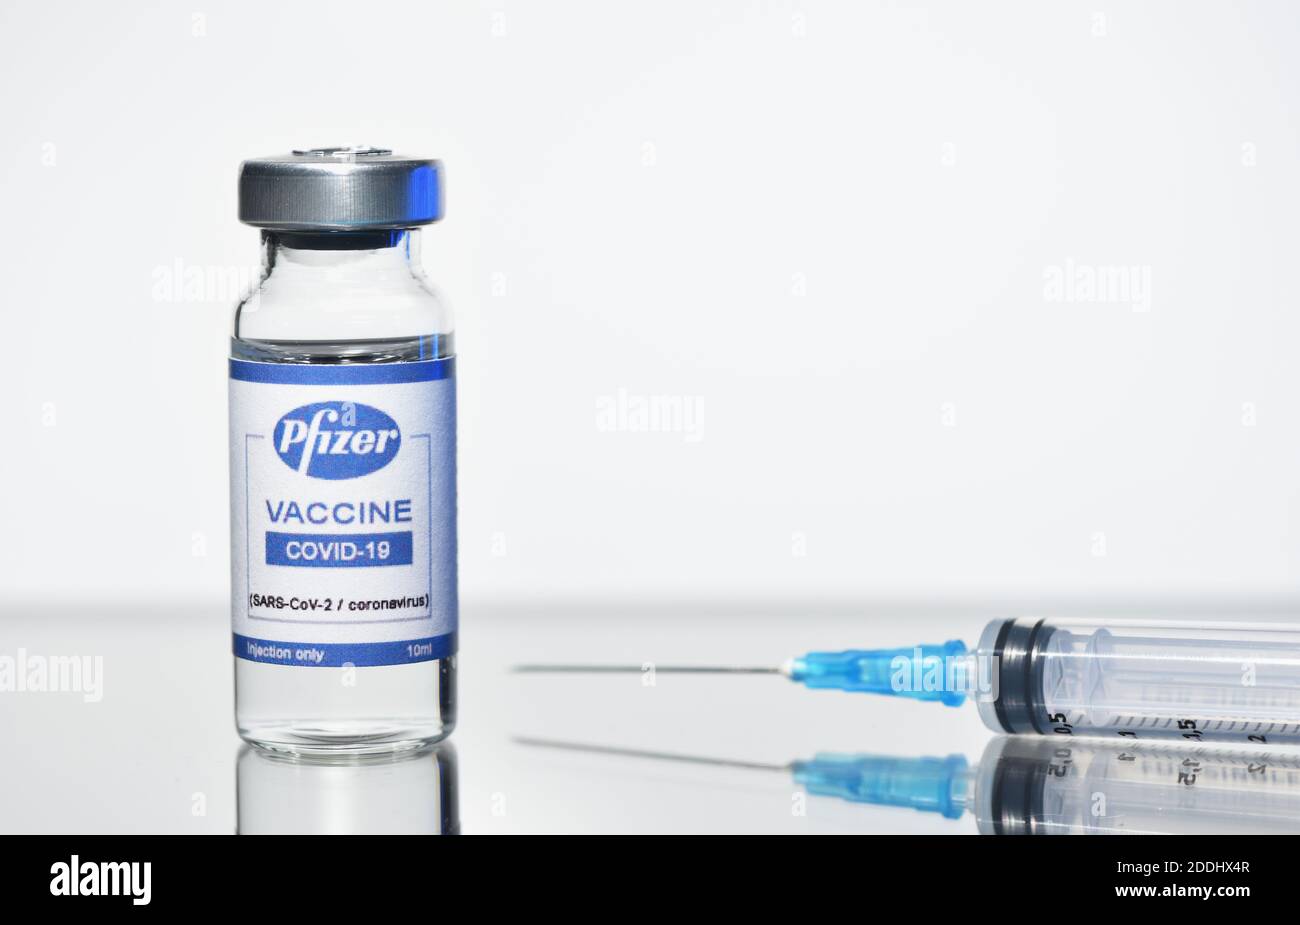 STARIY OSKOL, RUSSIA - NOVEMBER 23, 2020: New Pfizer vaccine and syringe on white background conceptual photo Stock Photo